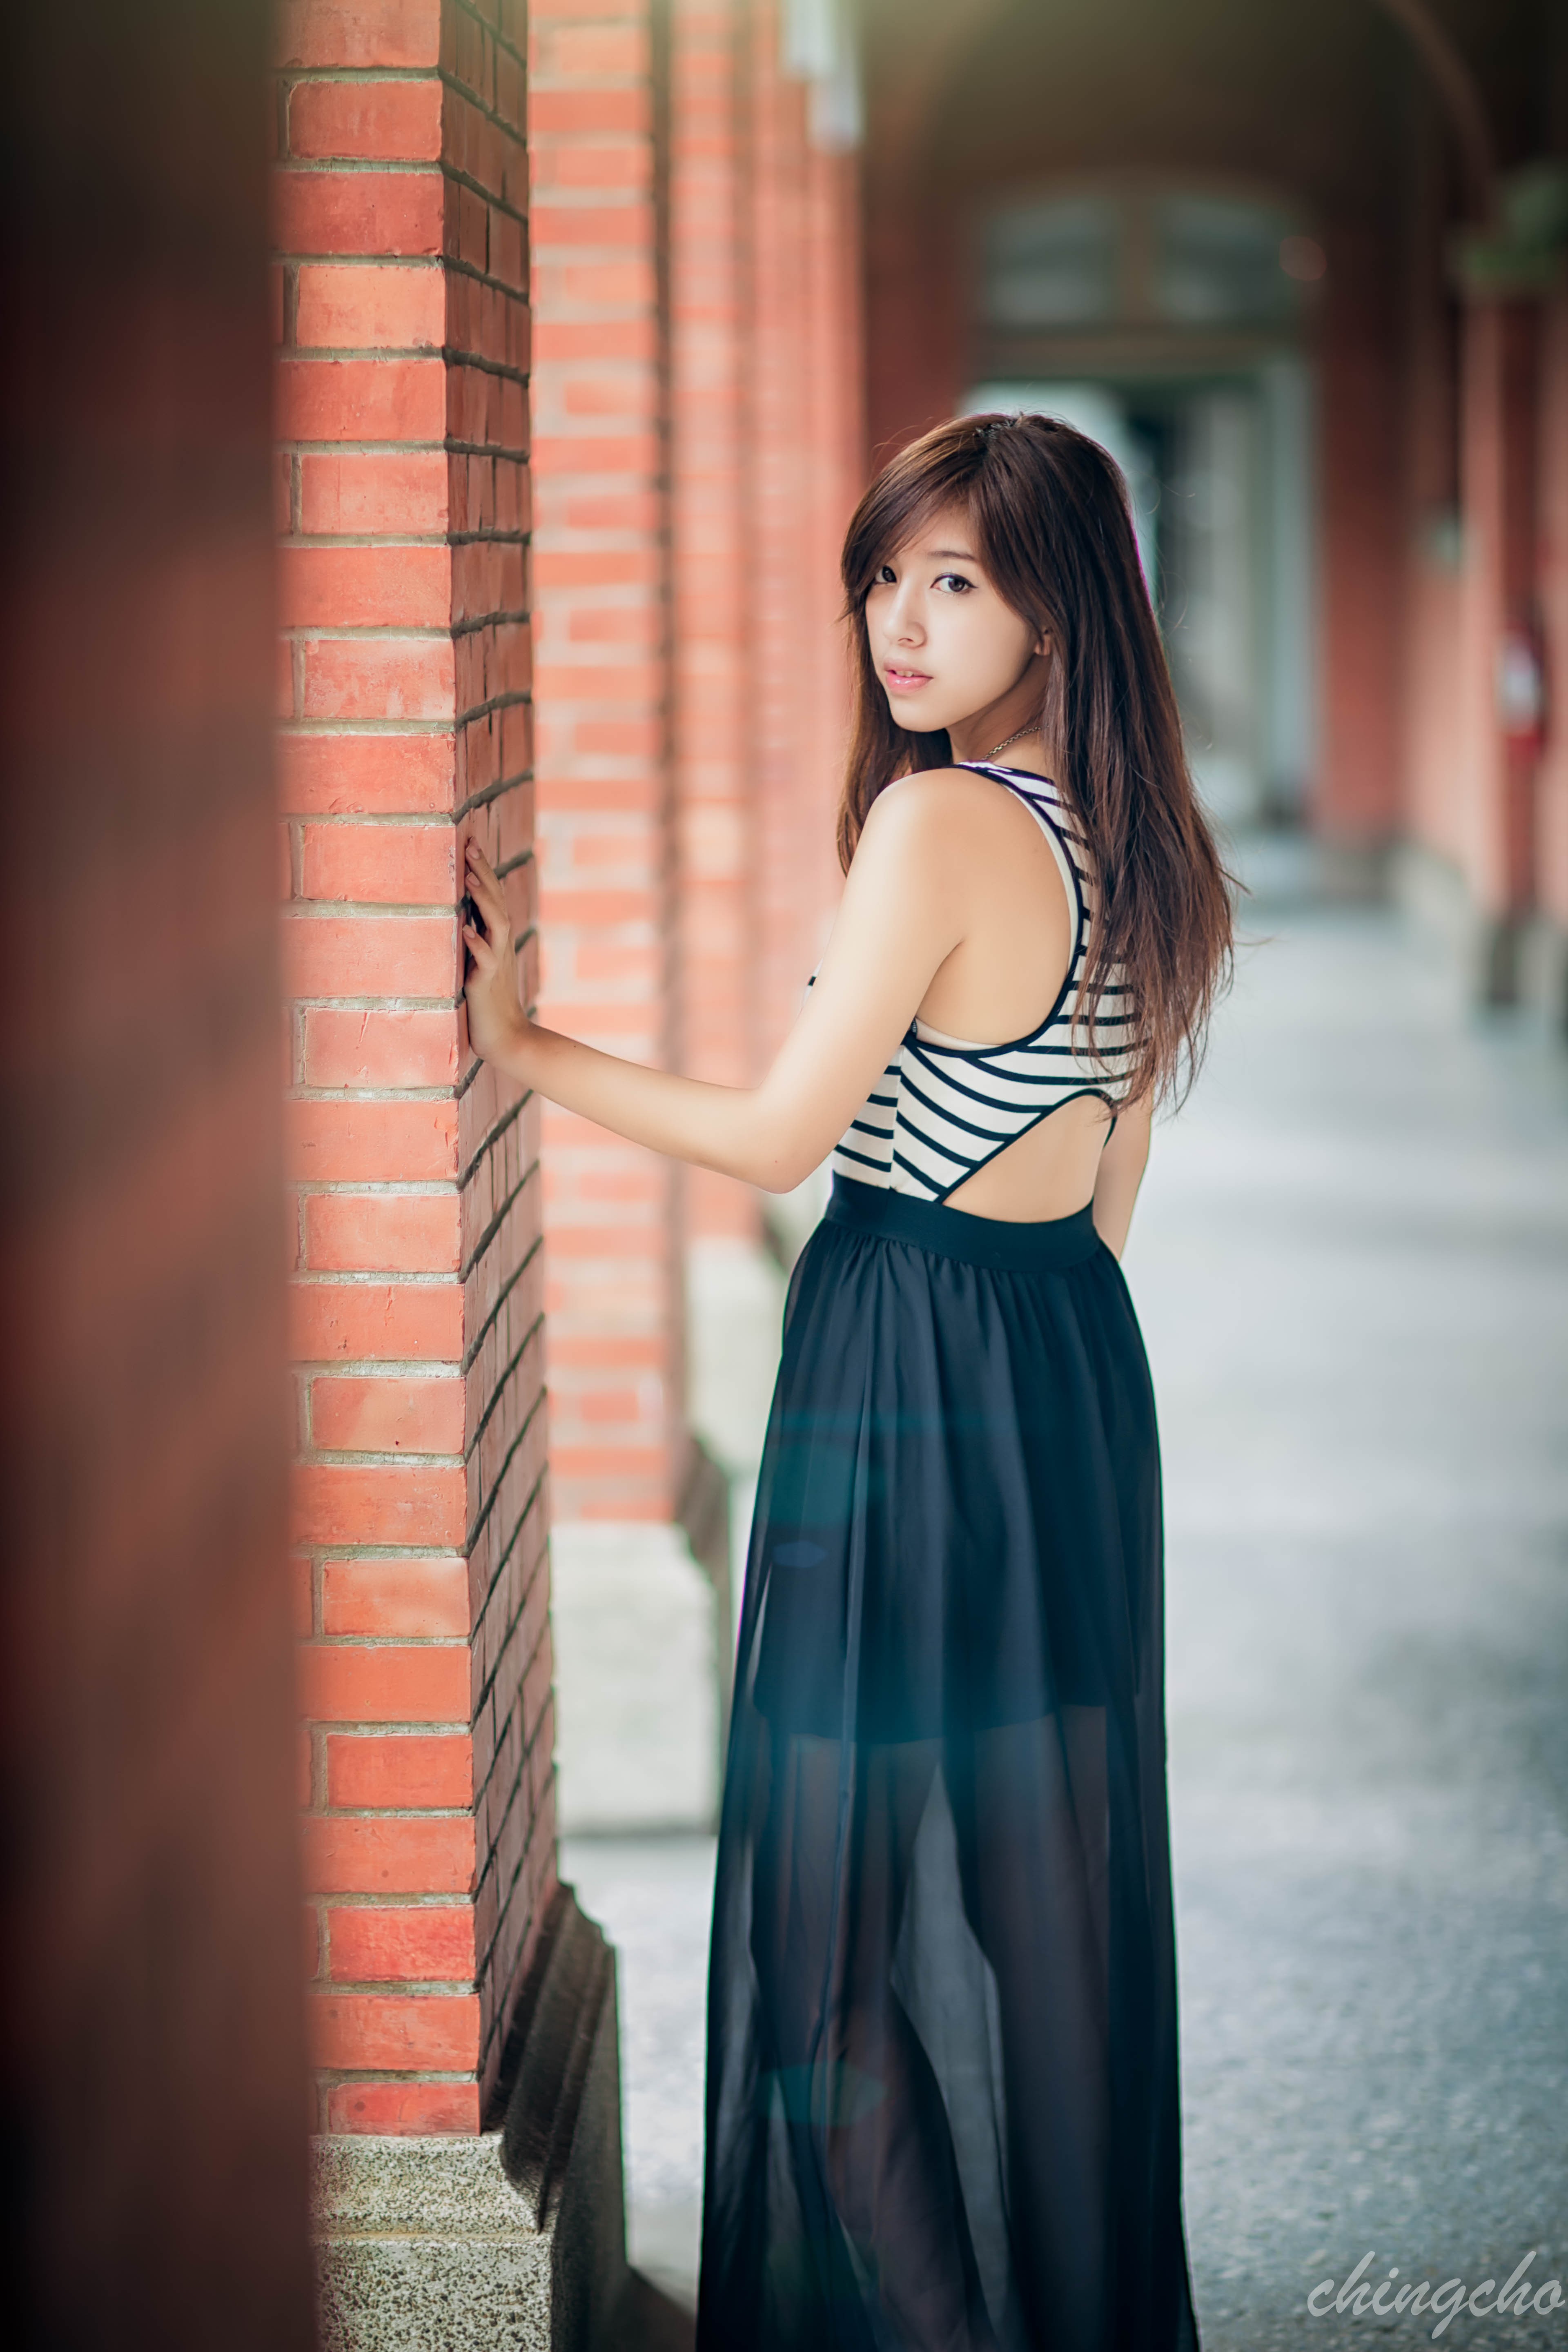 Chingcho Taiwan Taiwanese Asian Women Long Skirt Black Skirts Striped Tops Brunette Eyeliner Looking 3840x5760